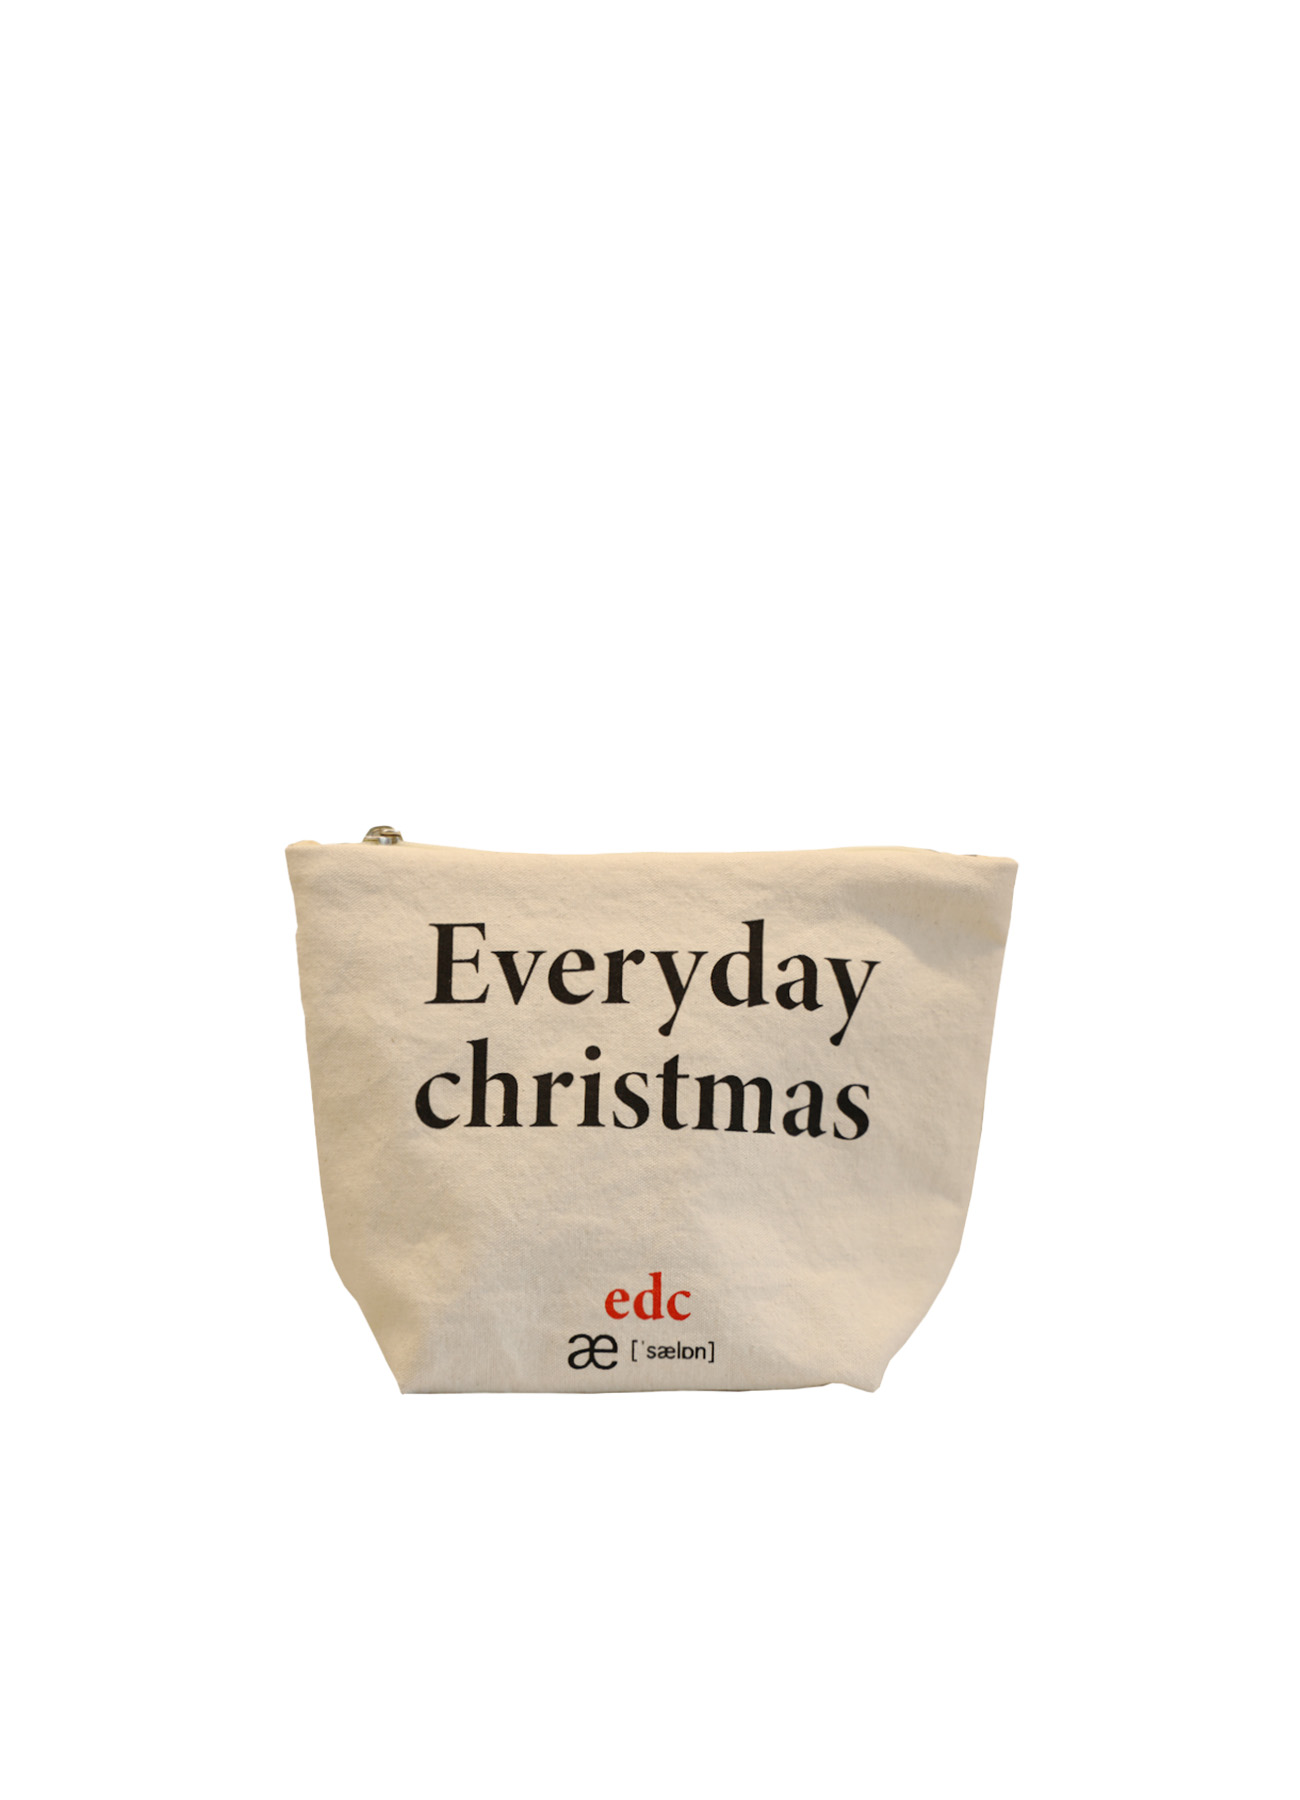 Edc - Everyday Christmas  Edc POUCH  ECRU